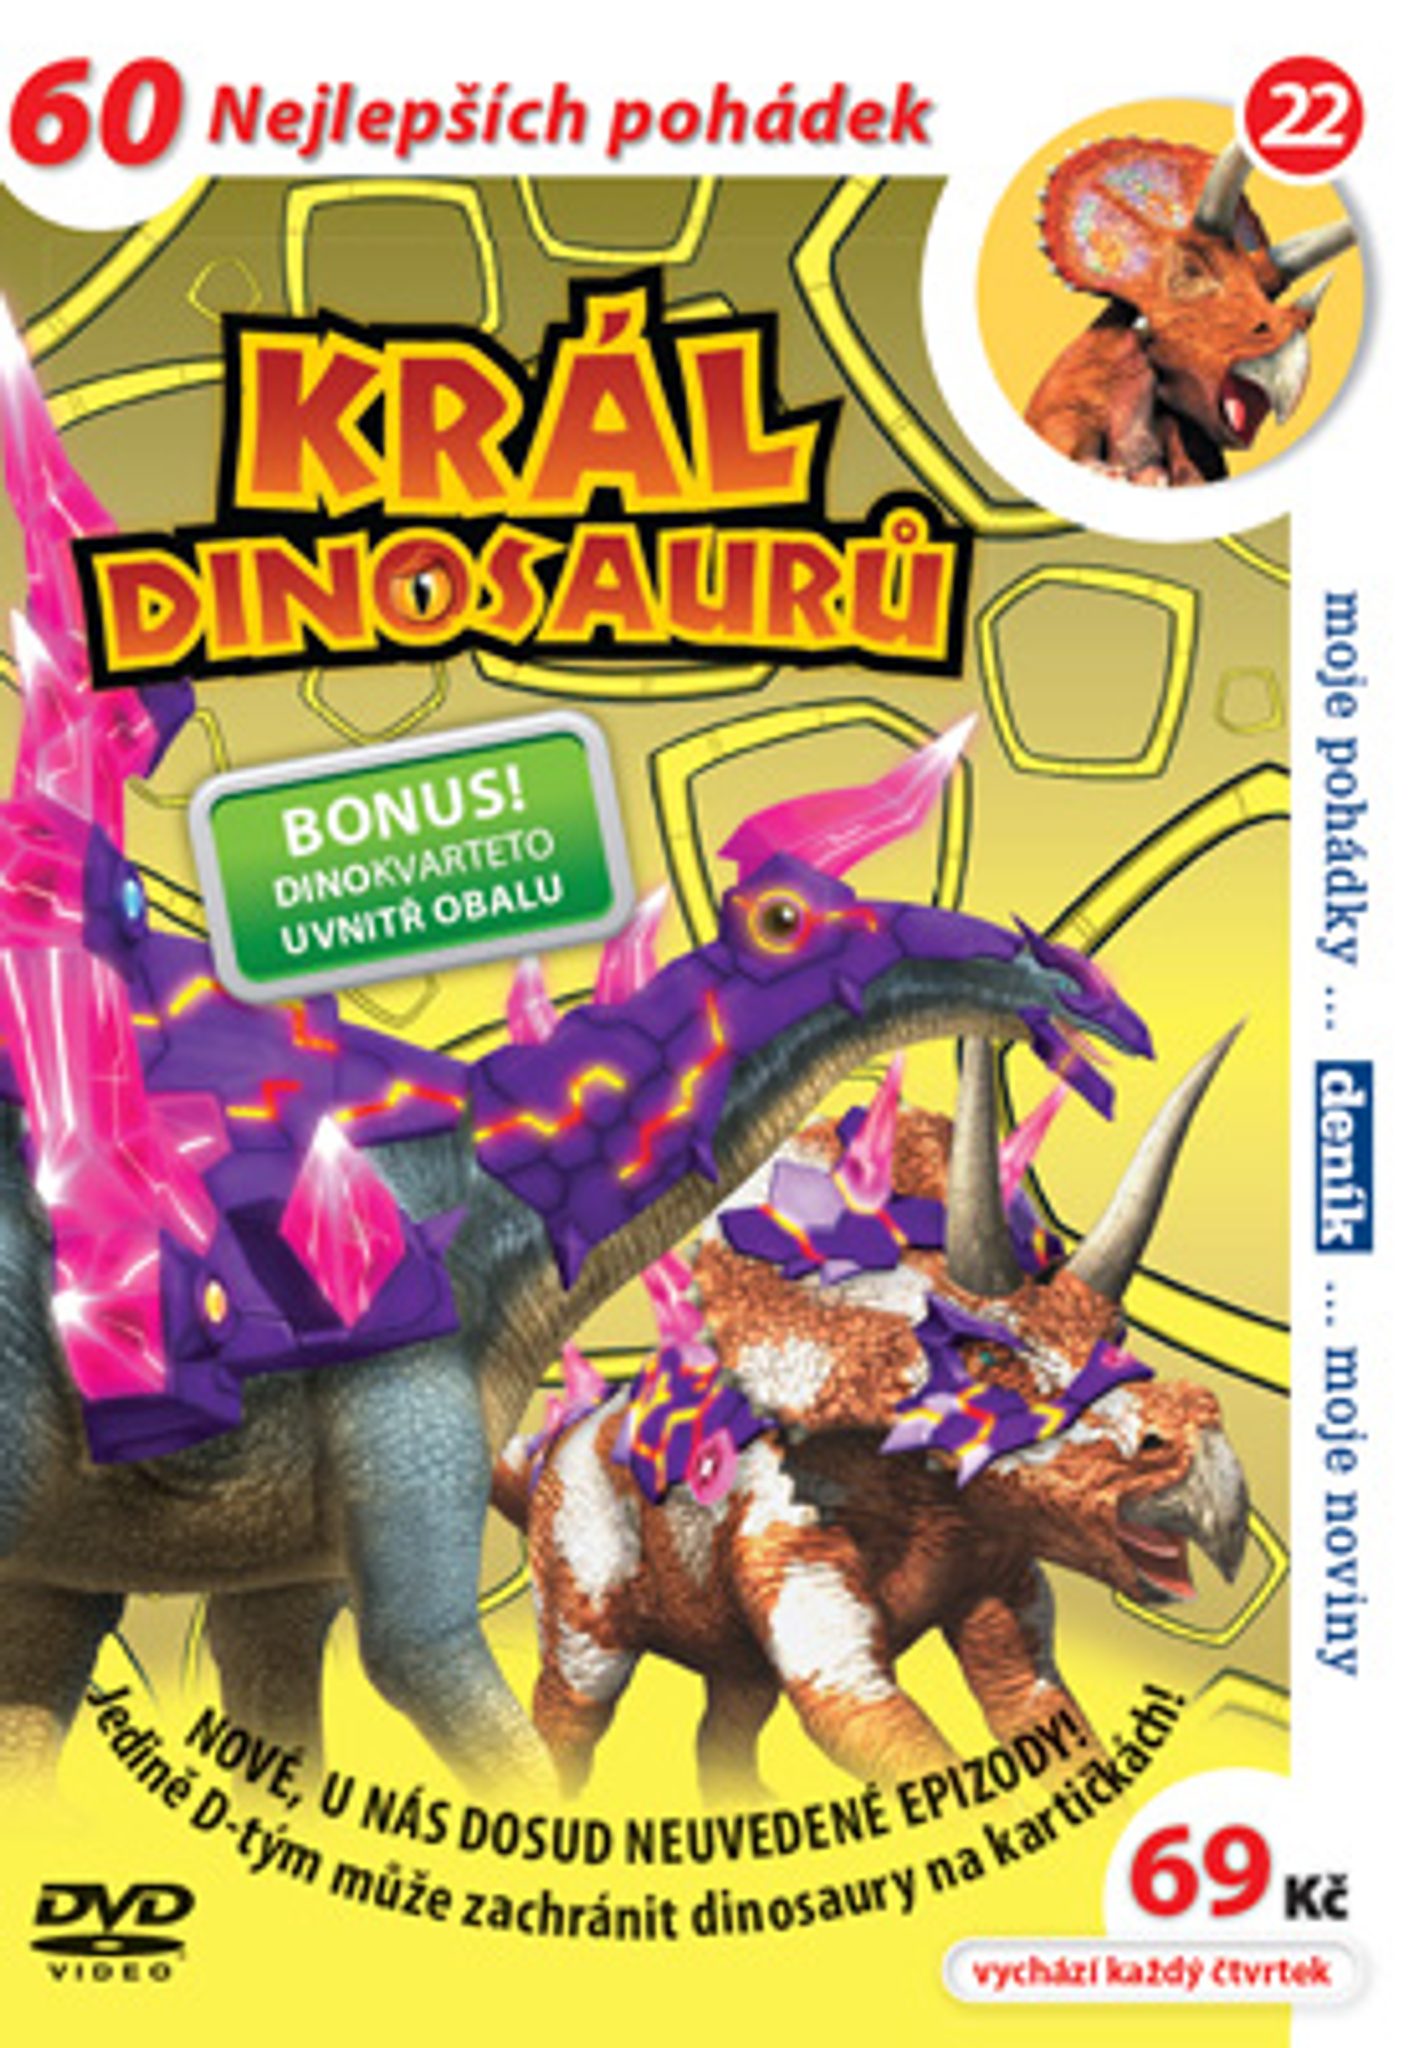 DVD Krl dinosaur 22